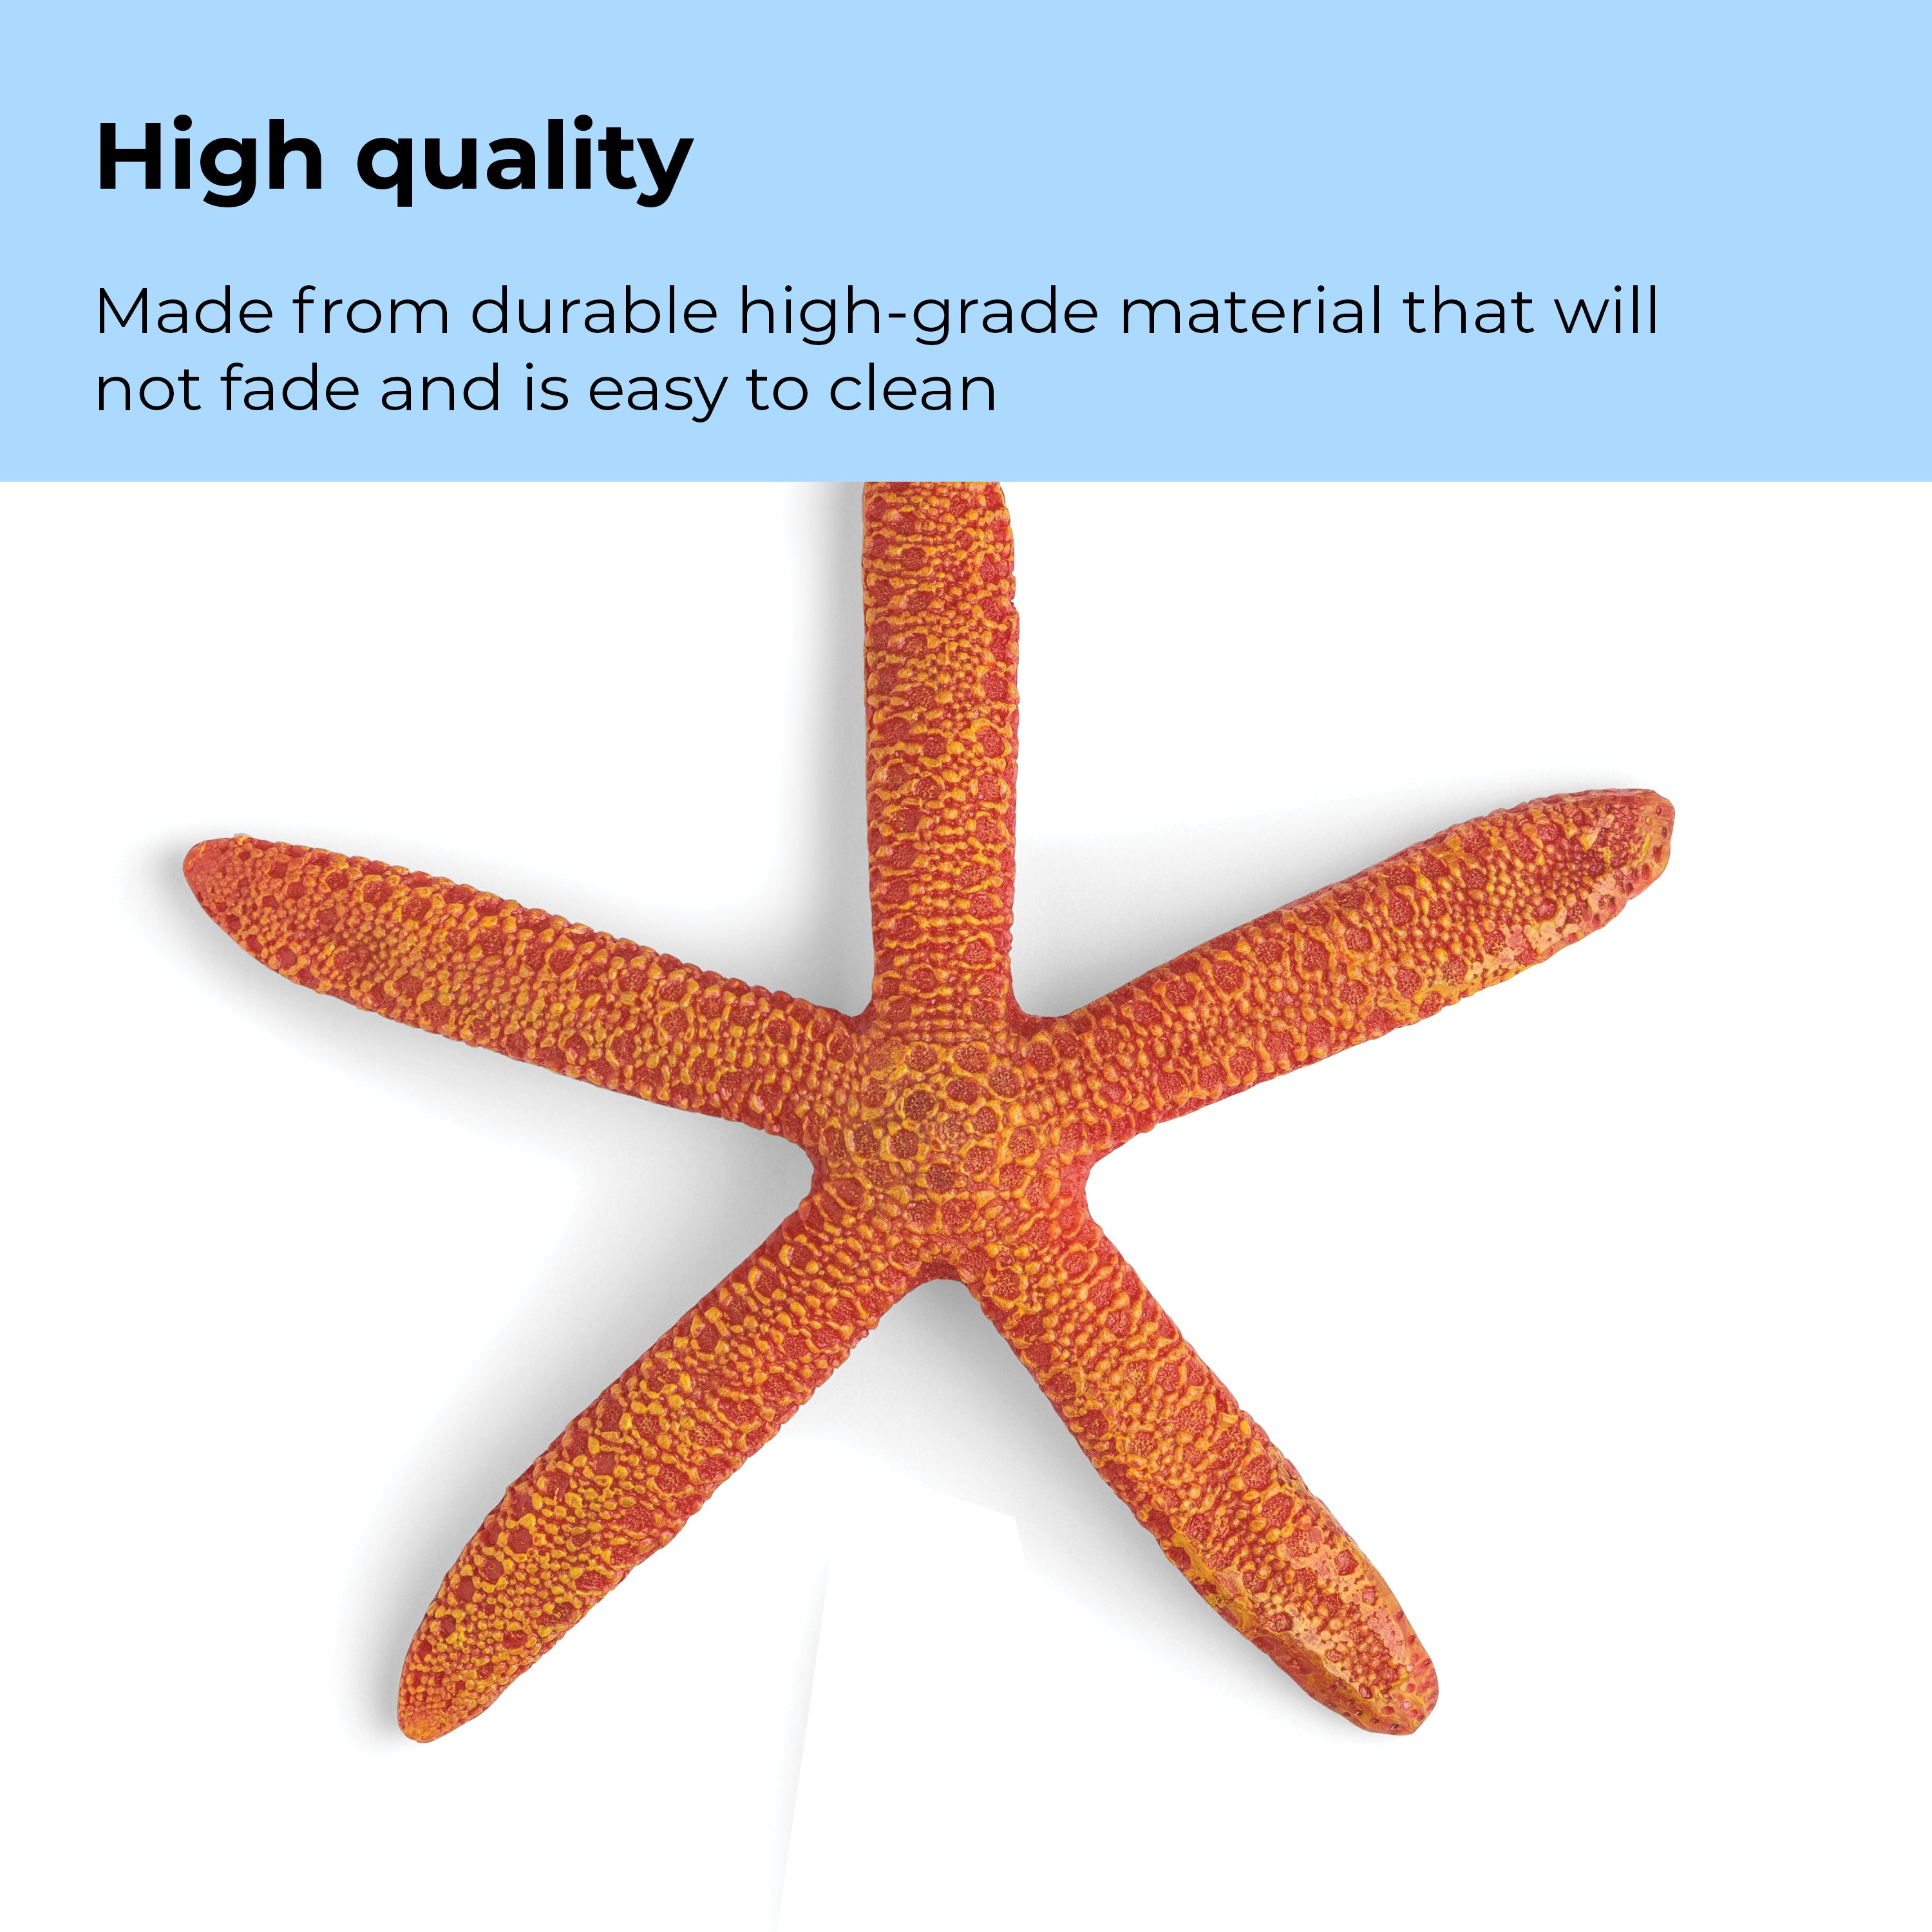 Starfish Set - High quality